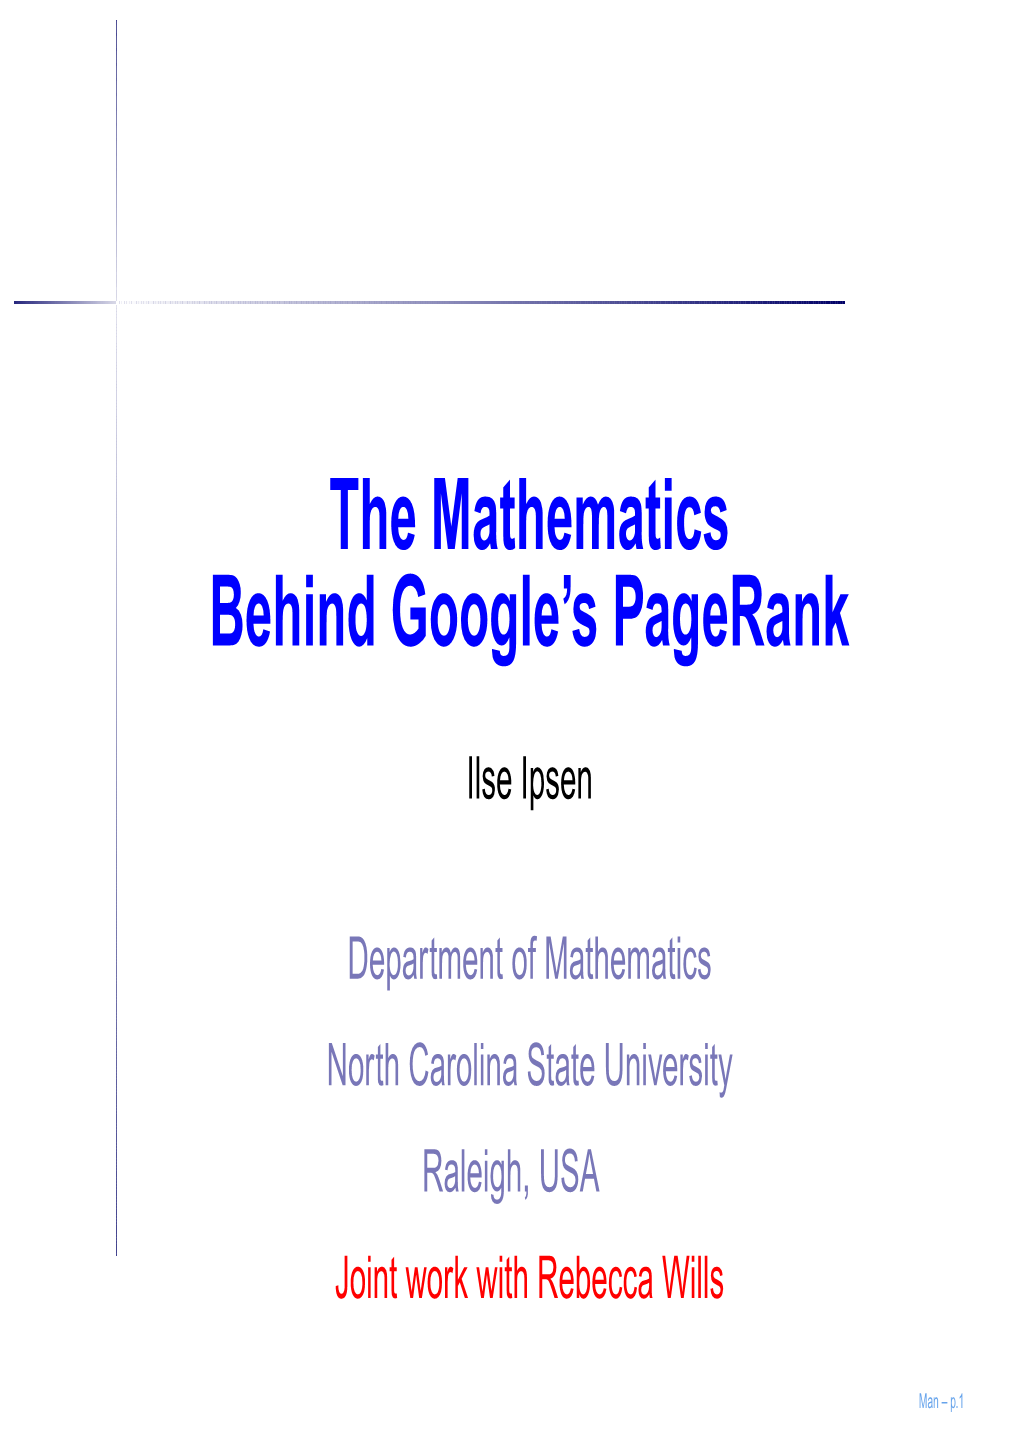 The Mathematics Behind Google's Pagerank